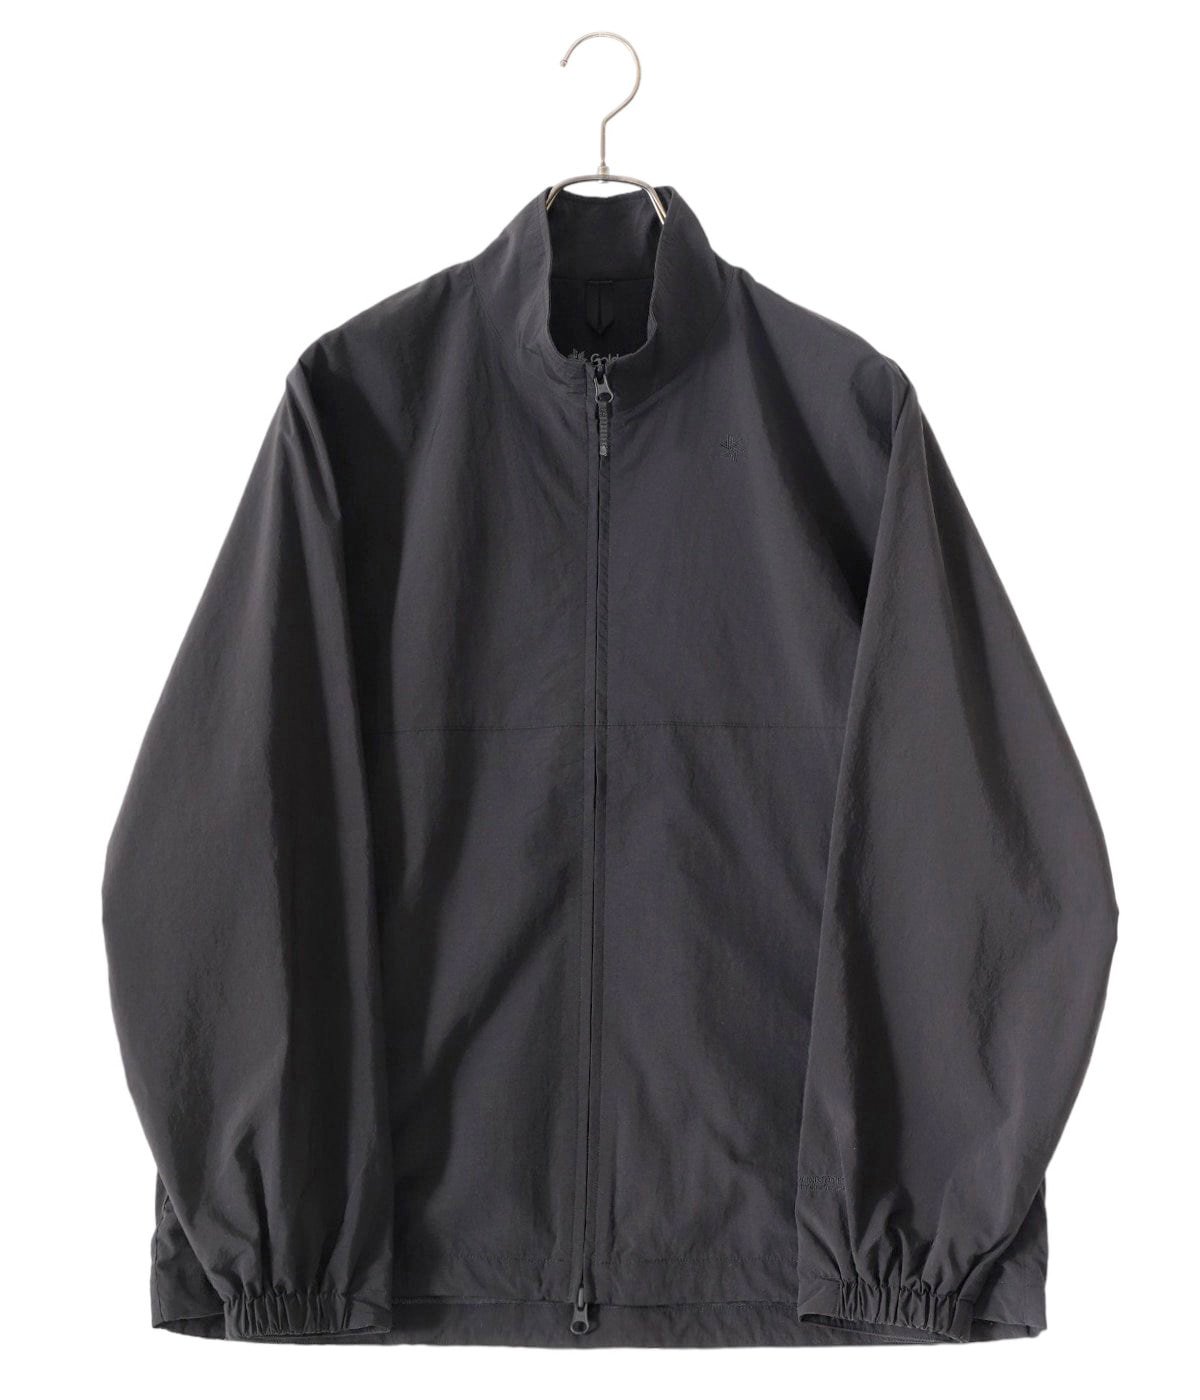 GORE-TEX WINDSTOPPER Nylon jacket | Goldwin(ゴールドウィン